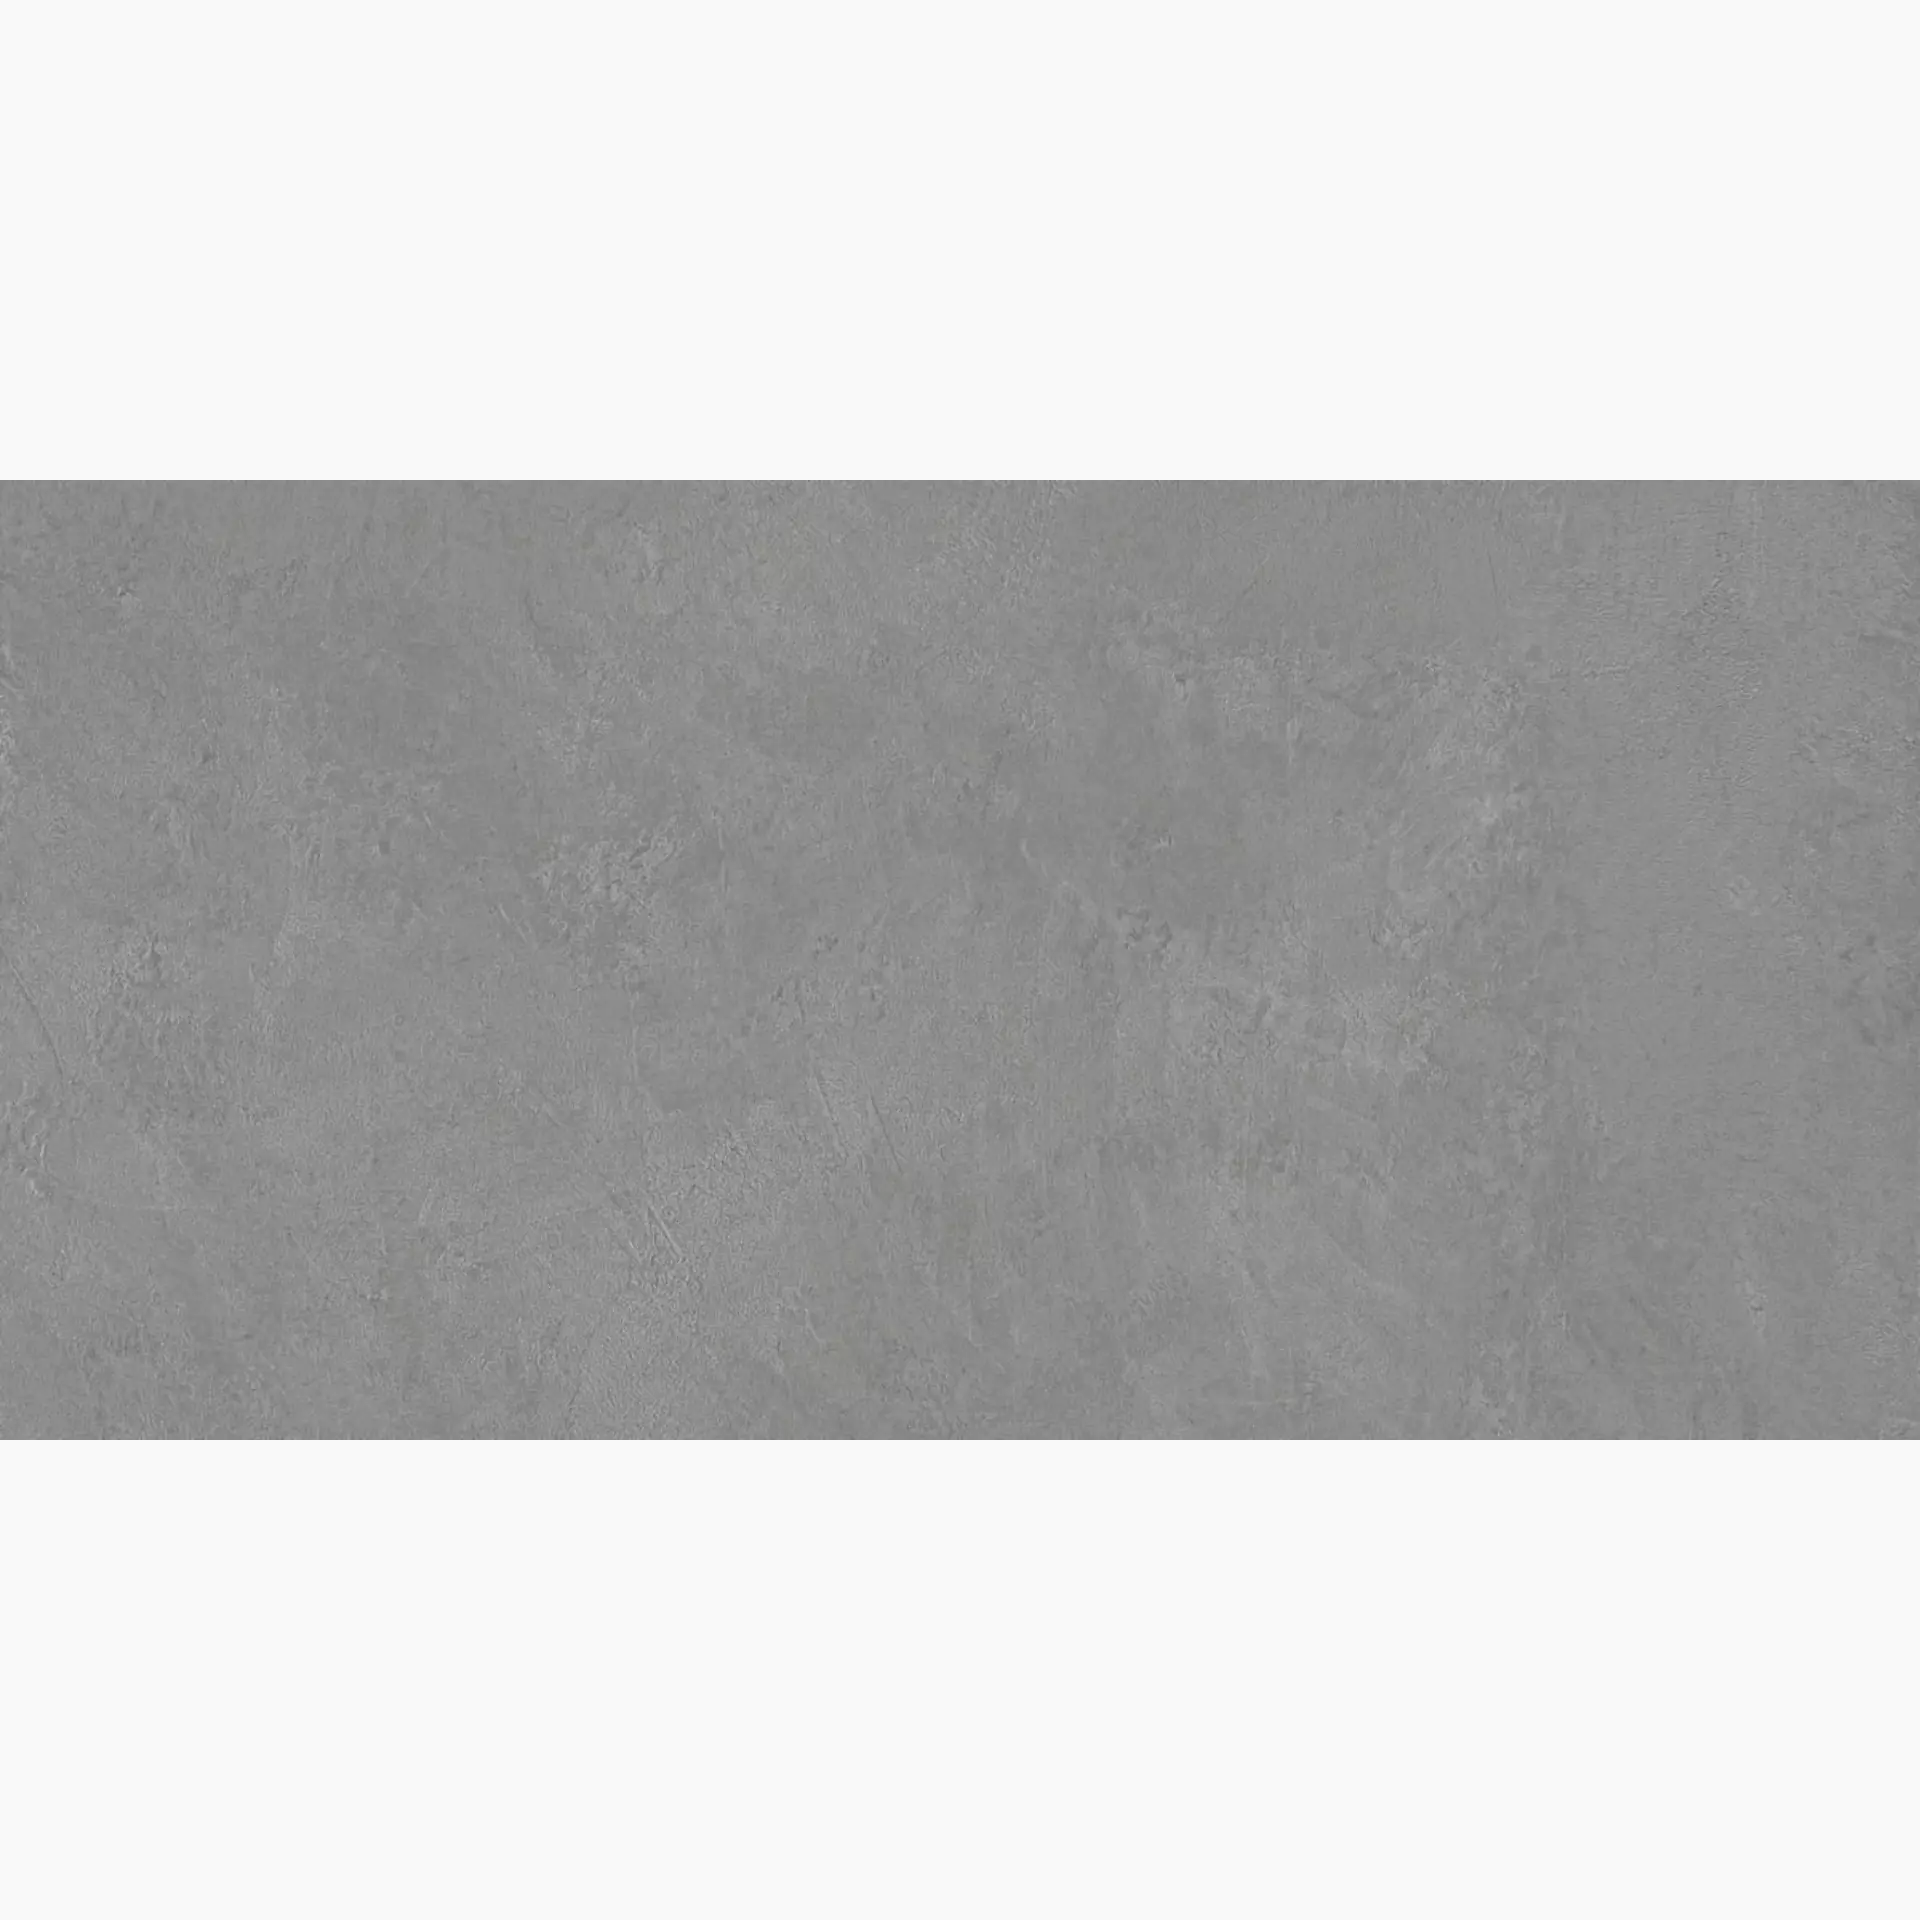 La Faenza Vis Middle Grey Natural Flat Matt 174413 60x120cm rectified 6,5mm - VIS6 12MG RM